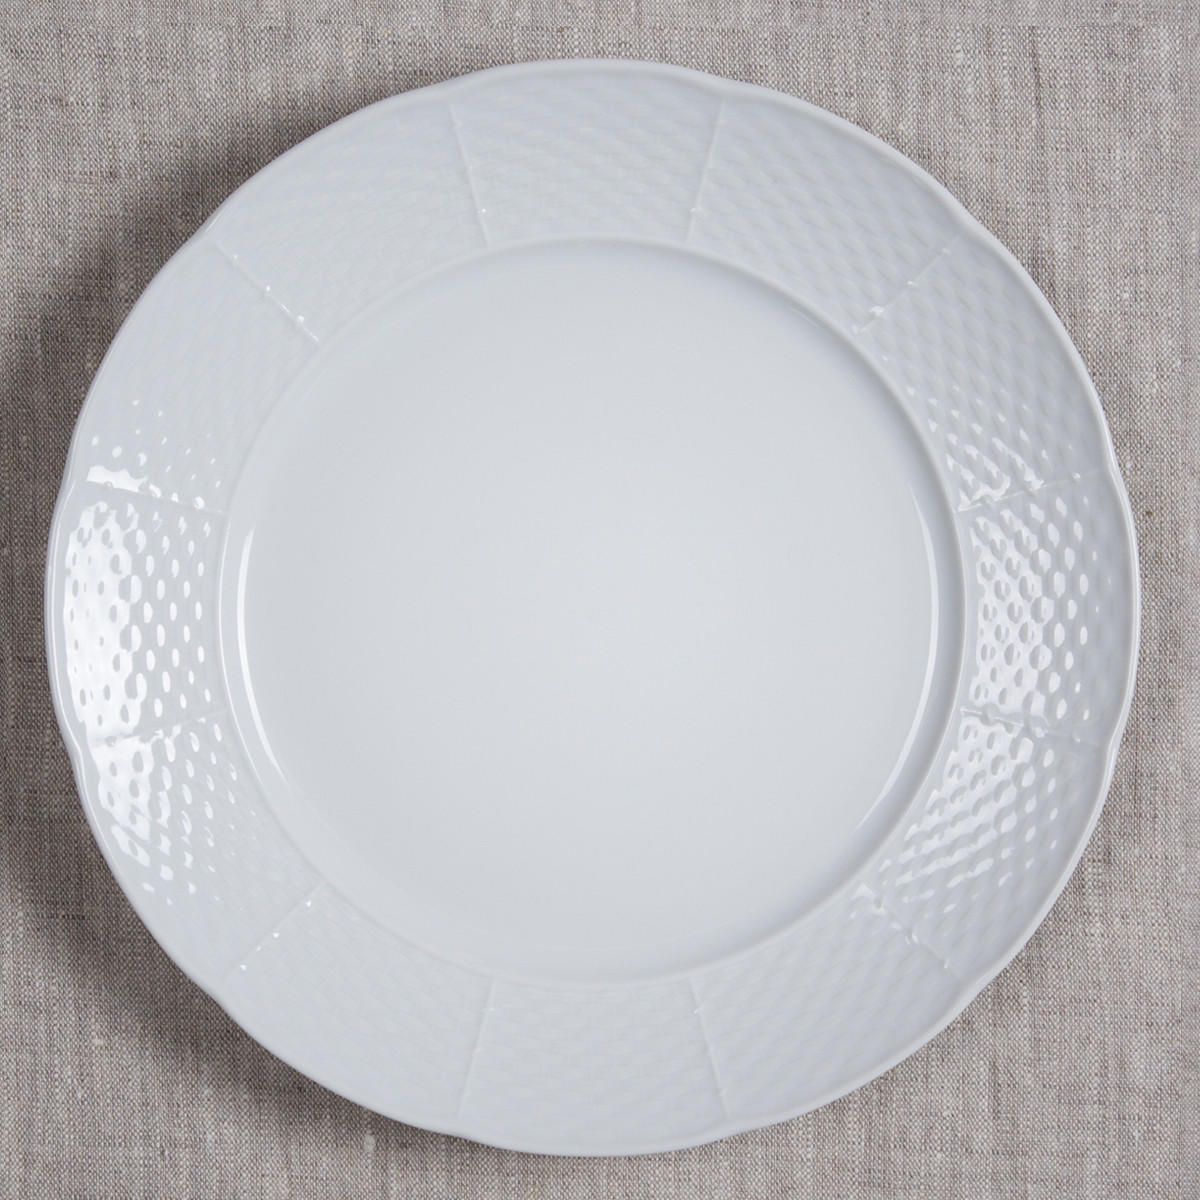 Brianne-konkle Weave 10.25" Dinner Plate Whiteware, BRIANNE KONKLE WEAVE 10.25" DINNER PLATE WHITEWARE, Sasha Nicholas